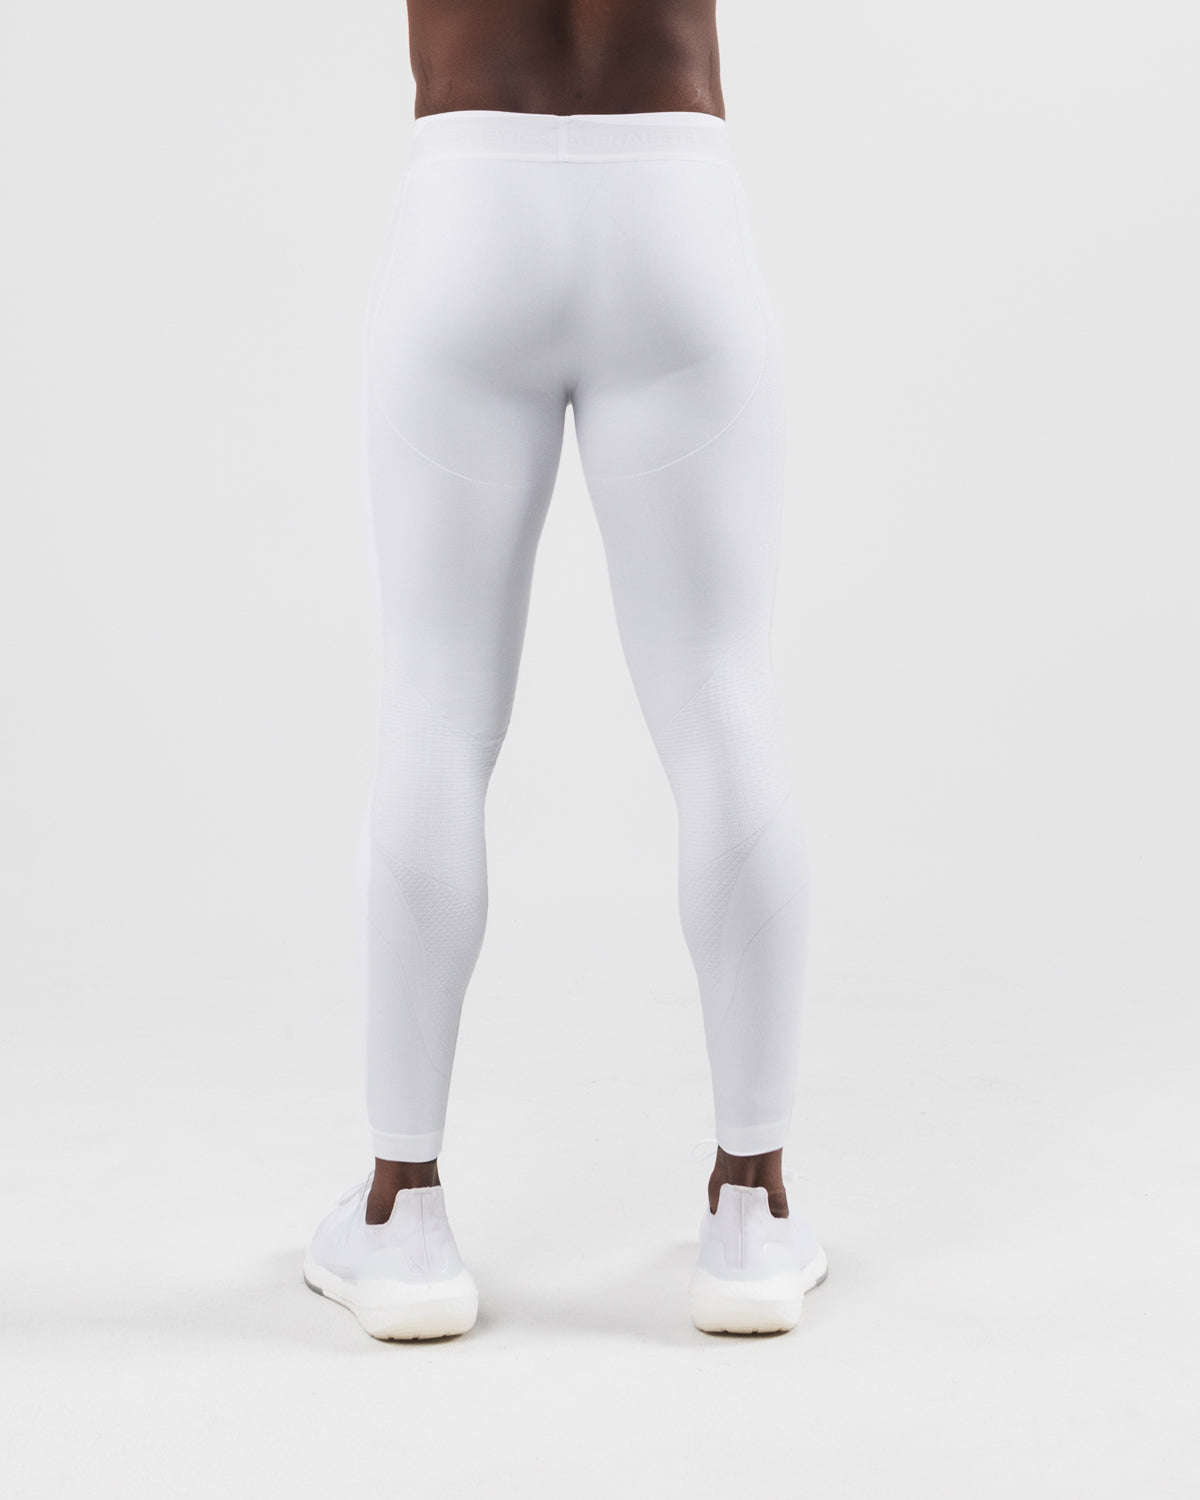 Reform Compression Legging - White – Alphalete Athletics